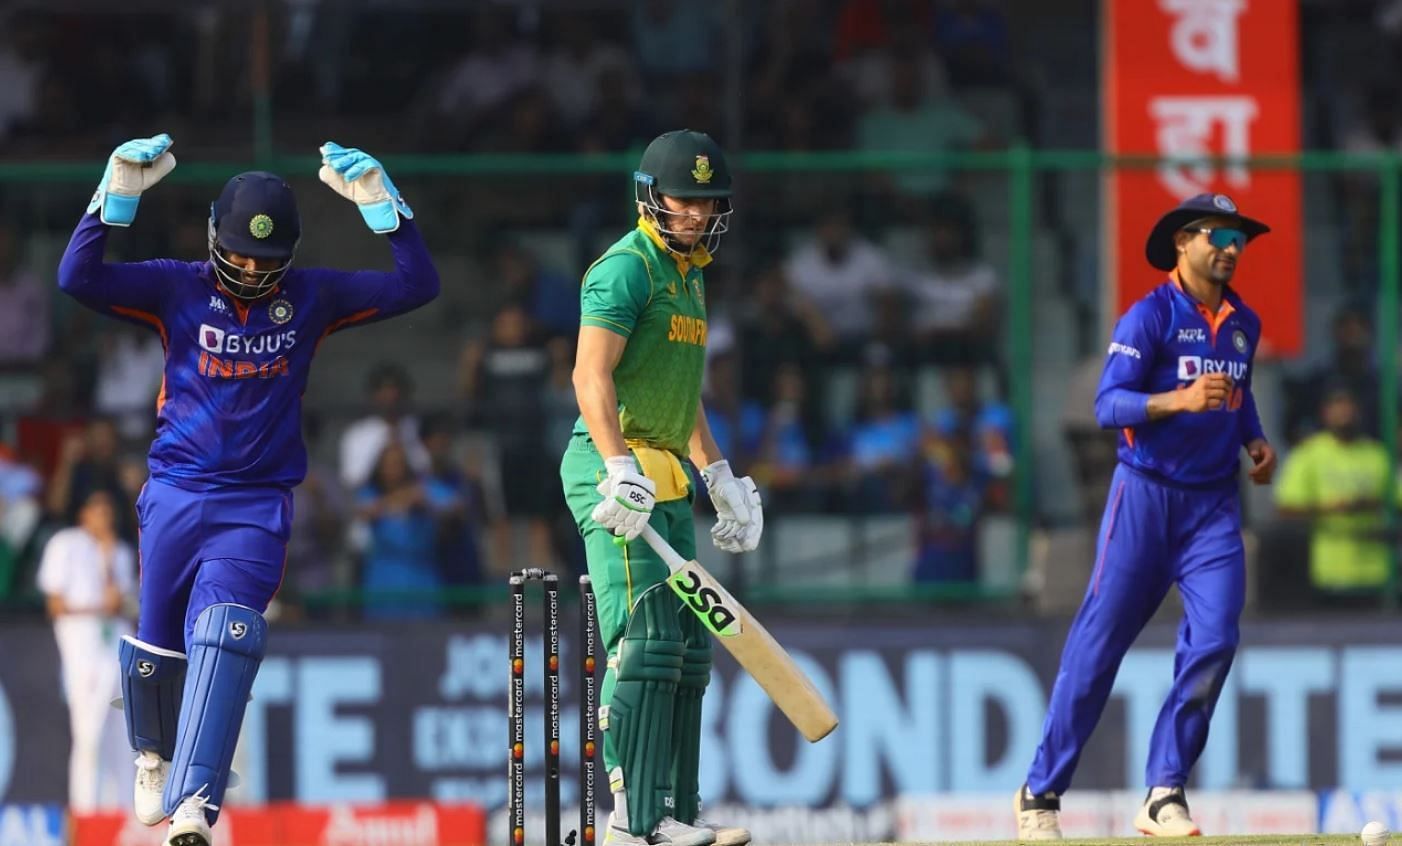 India vs South Africa, third ODI (Image - Espn)